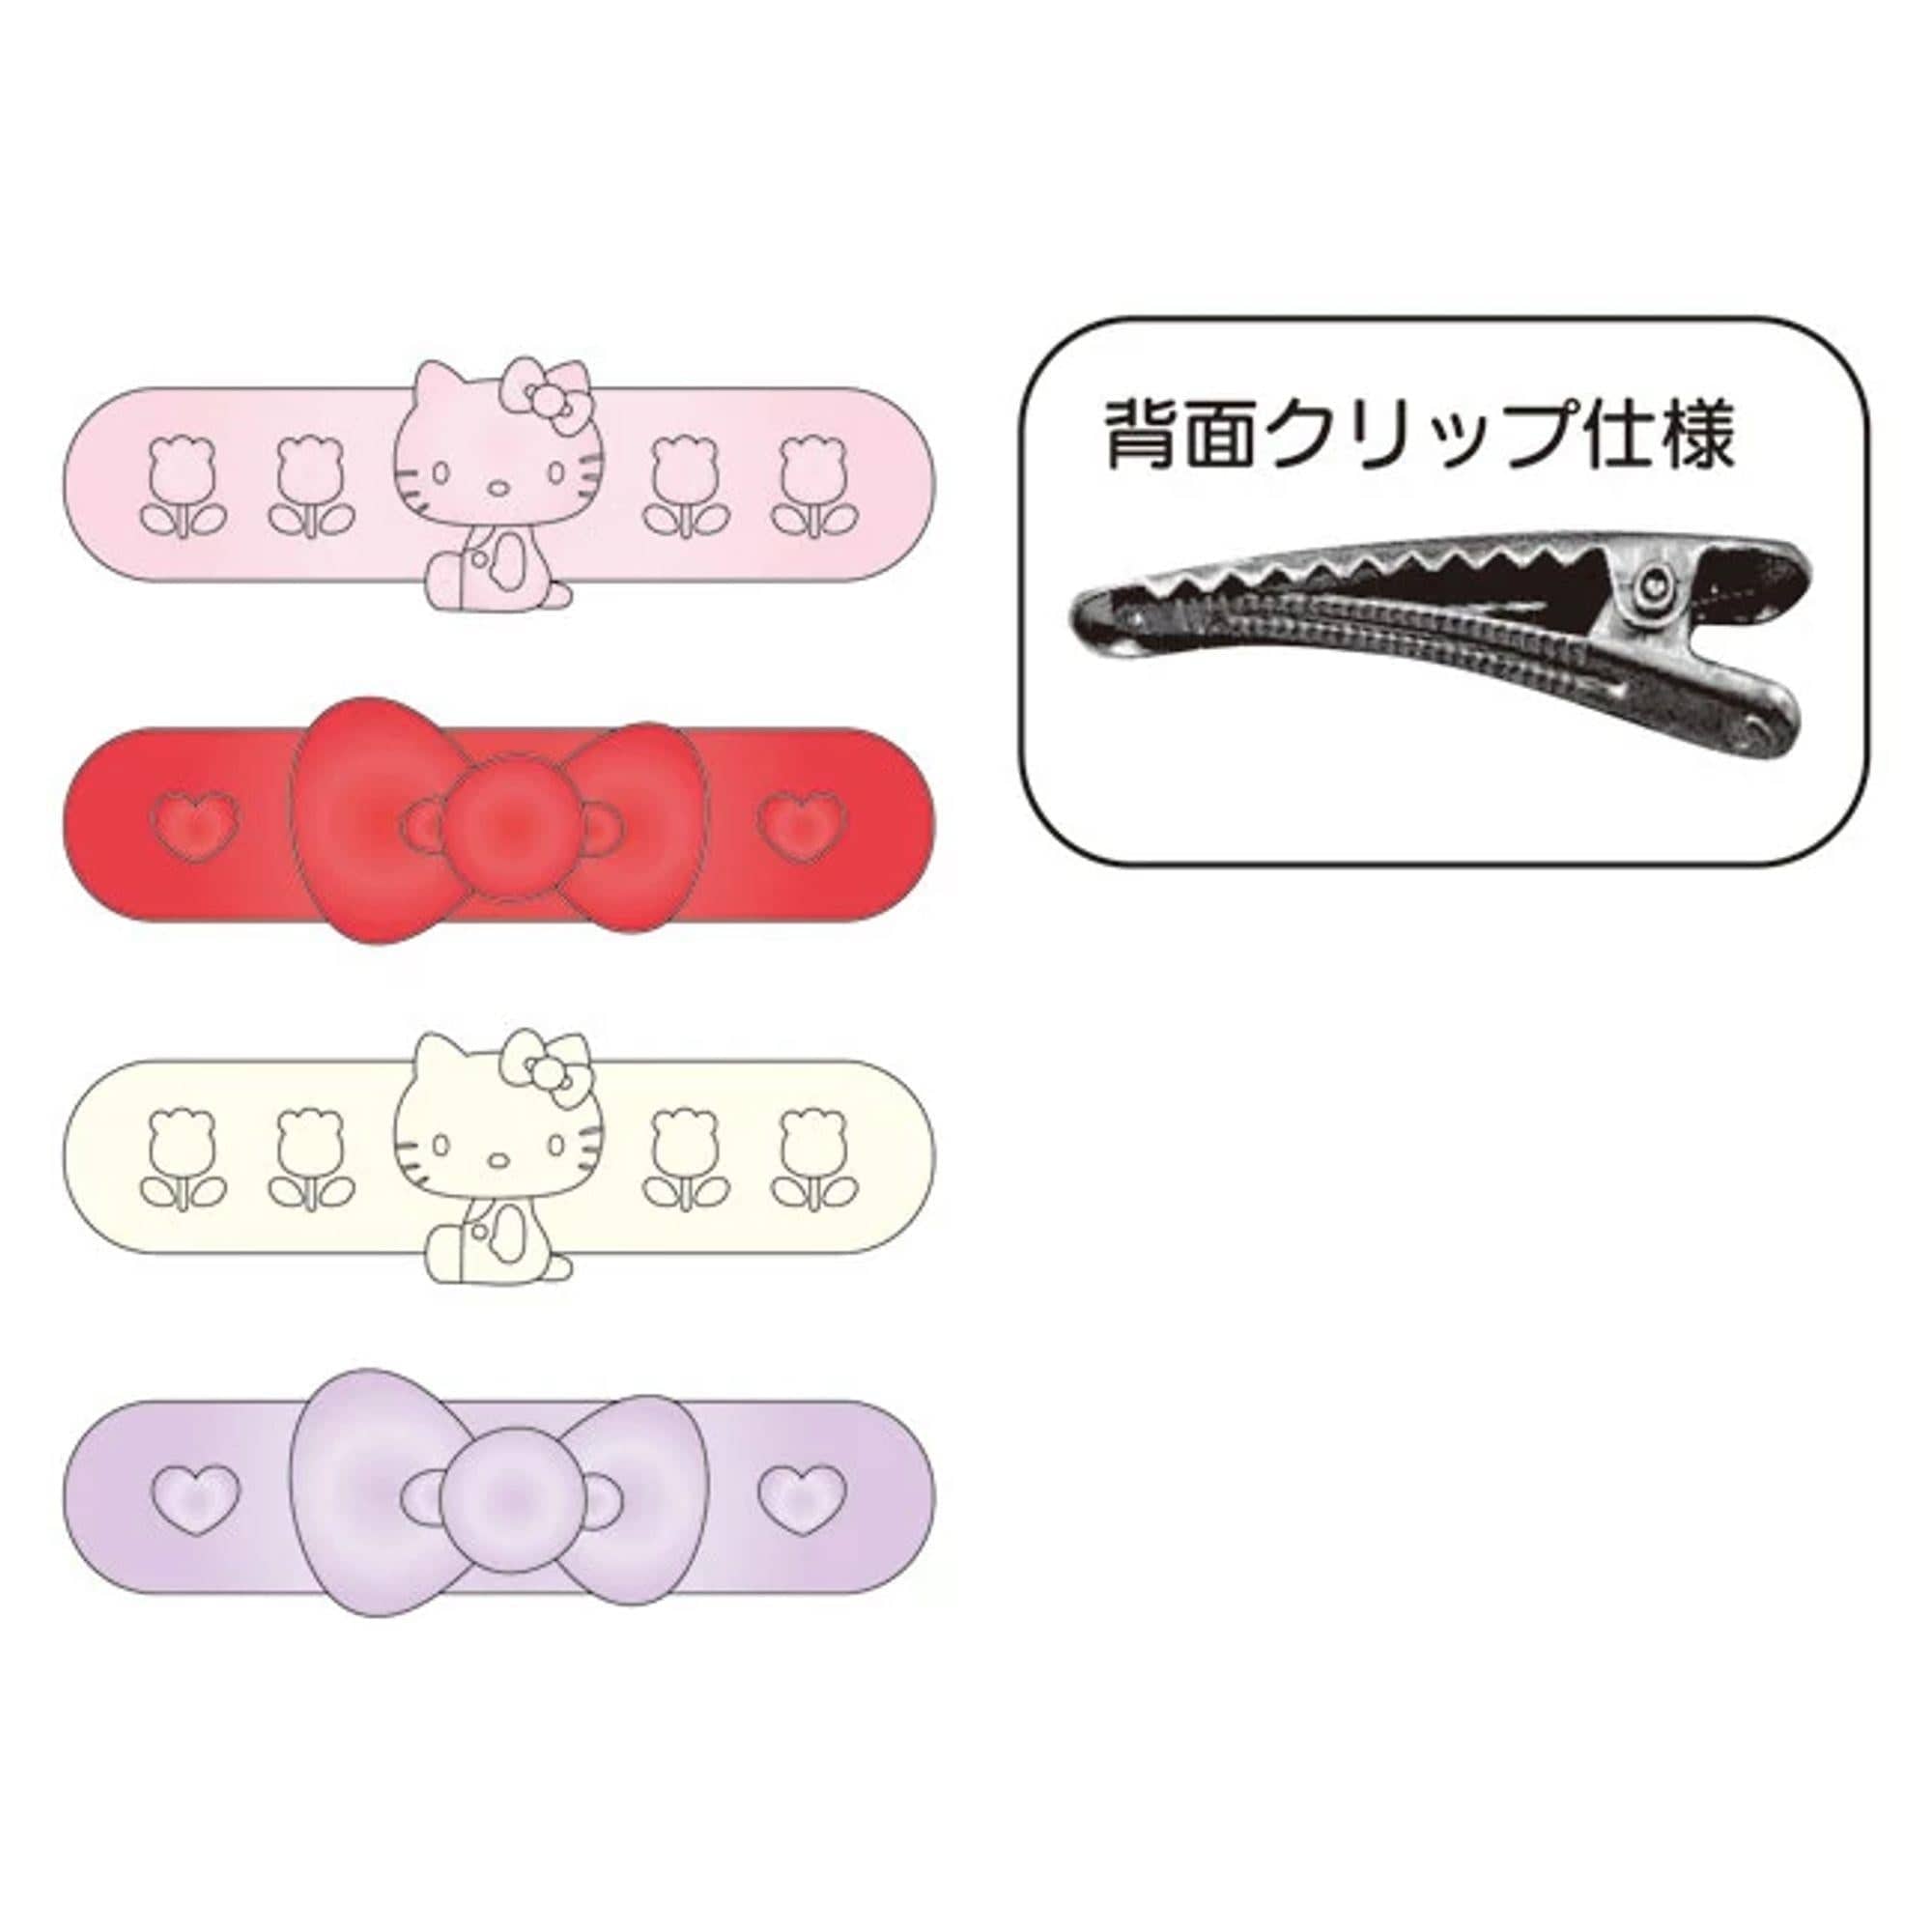 Aesthetic Hello Kitty Kawaii Accessory Codes and Links!